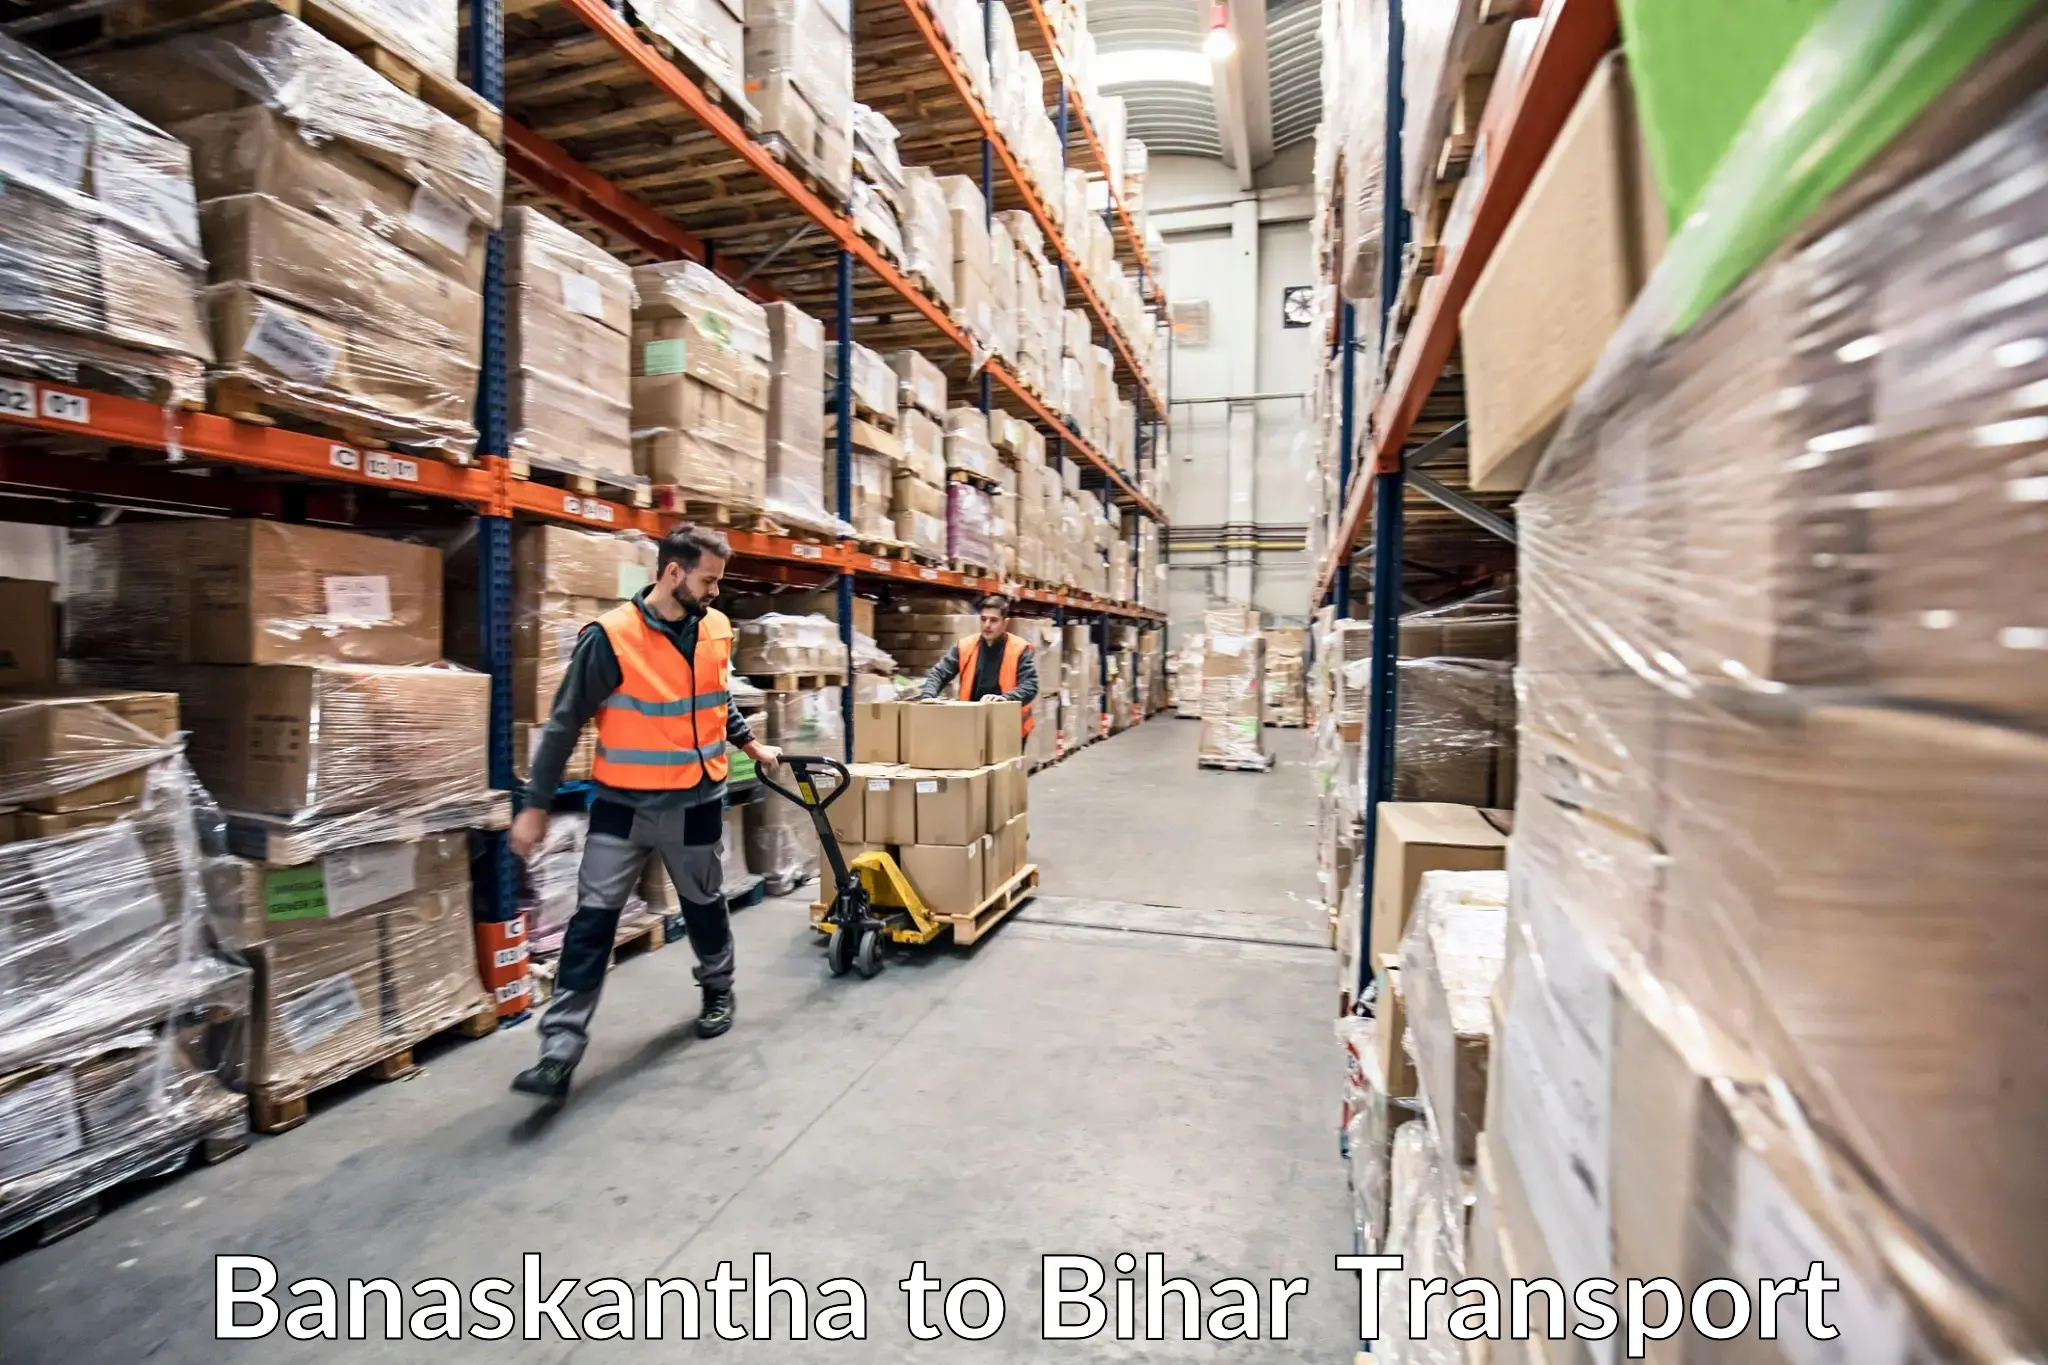 Truck transport companies in India Banaskantha to Katoria